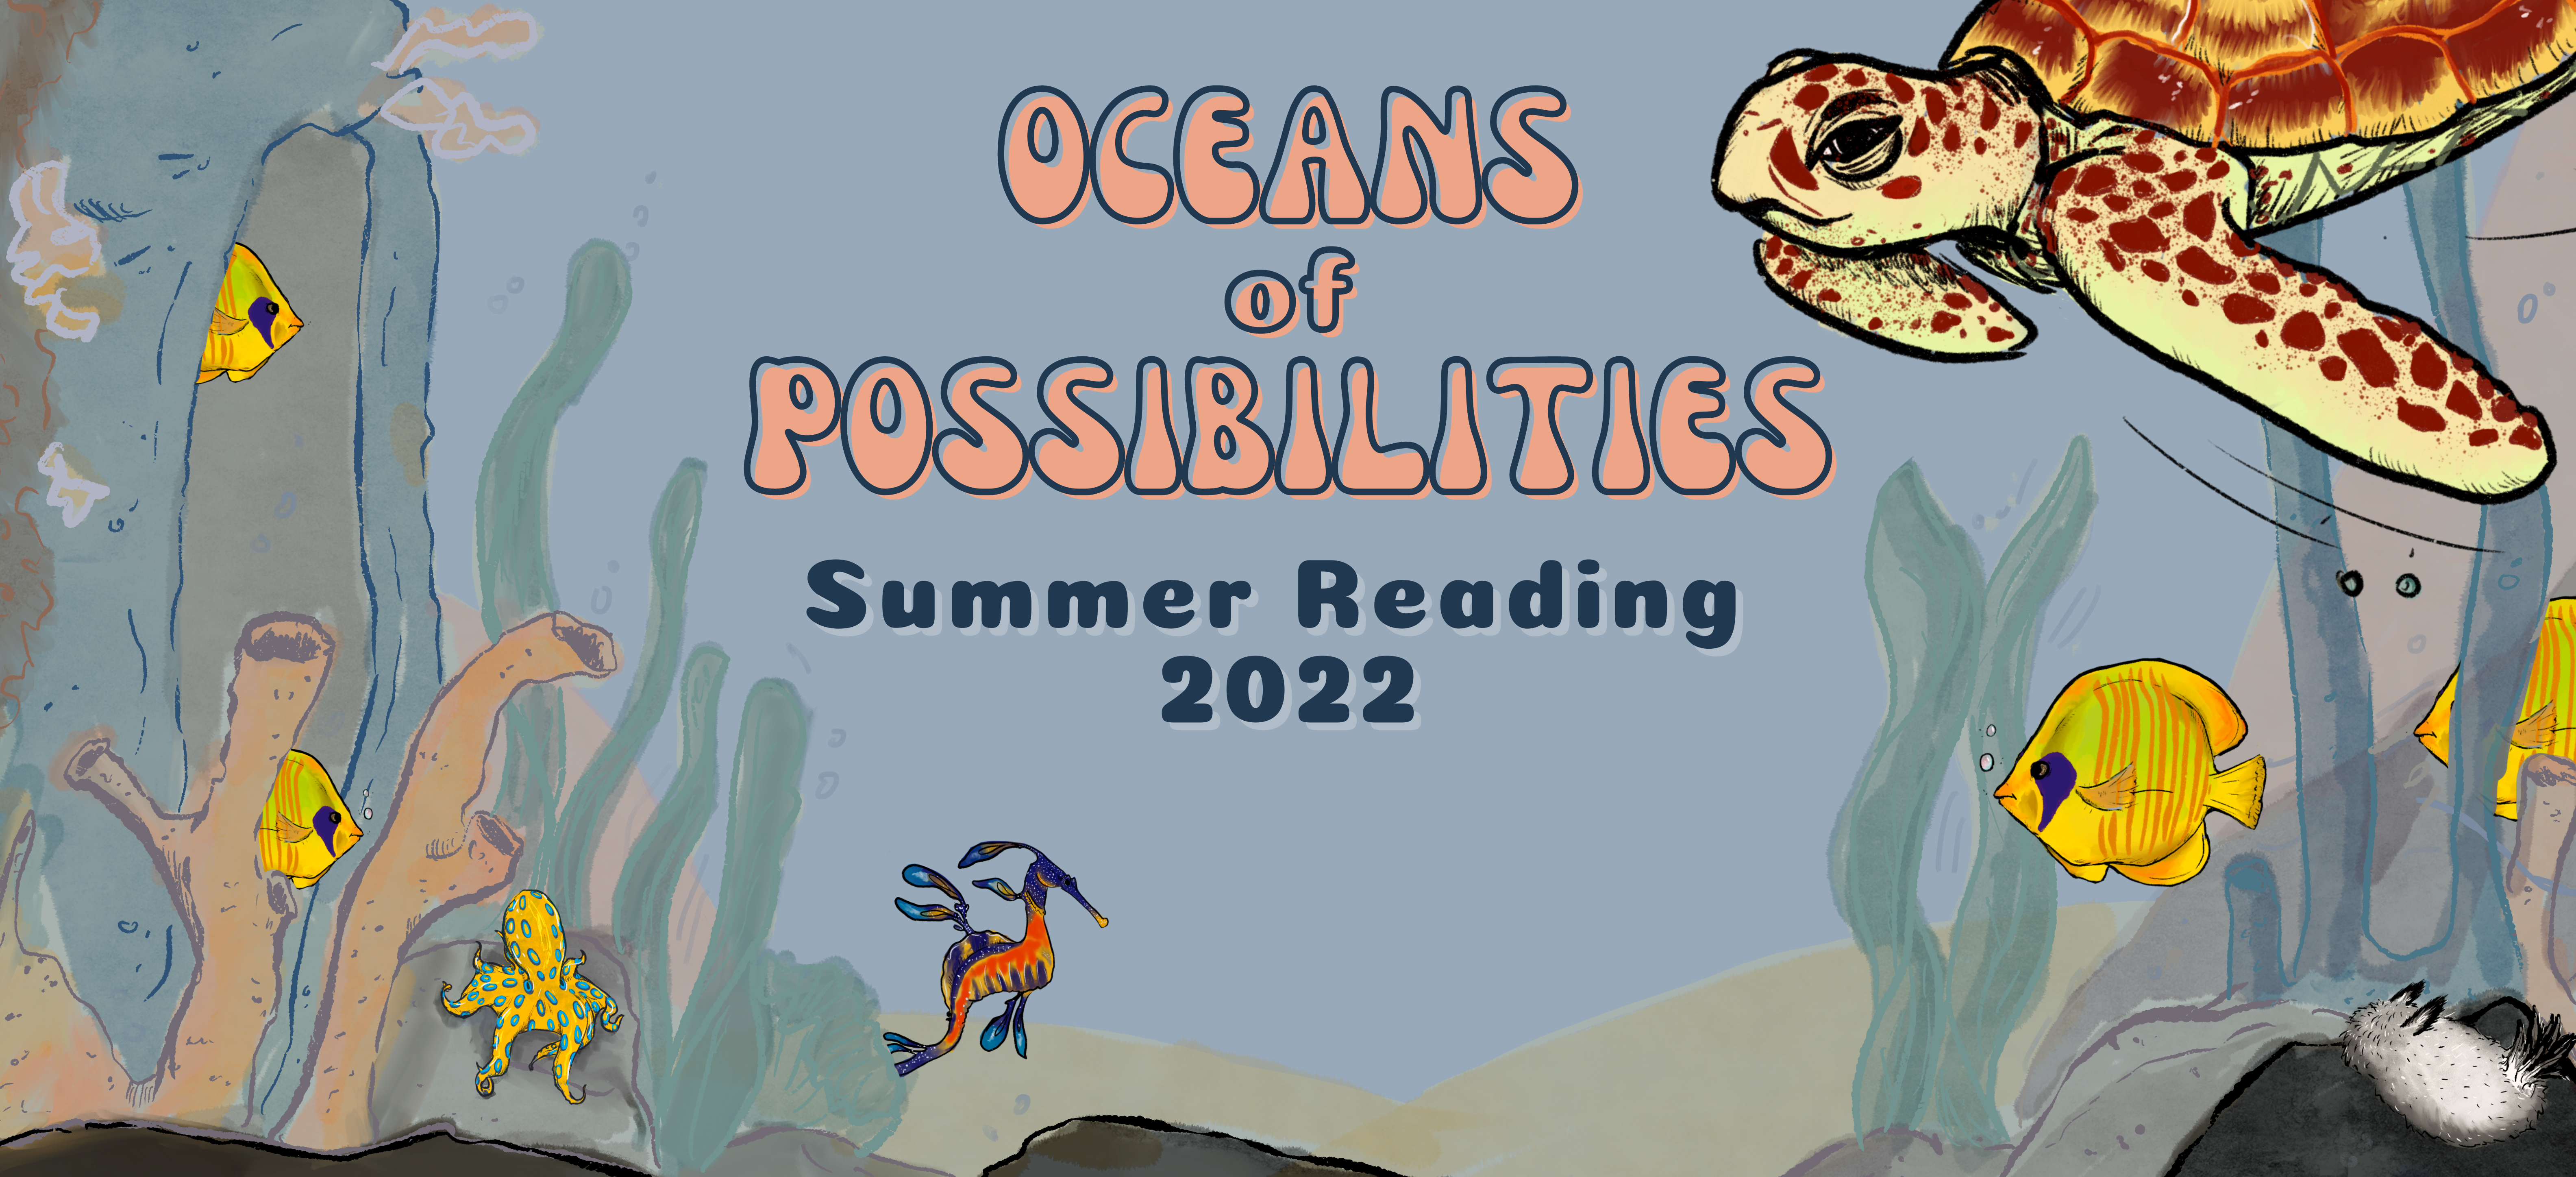 Summer Reading Program image